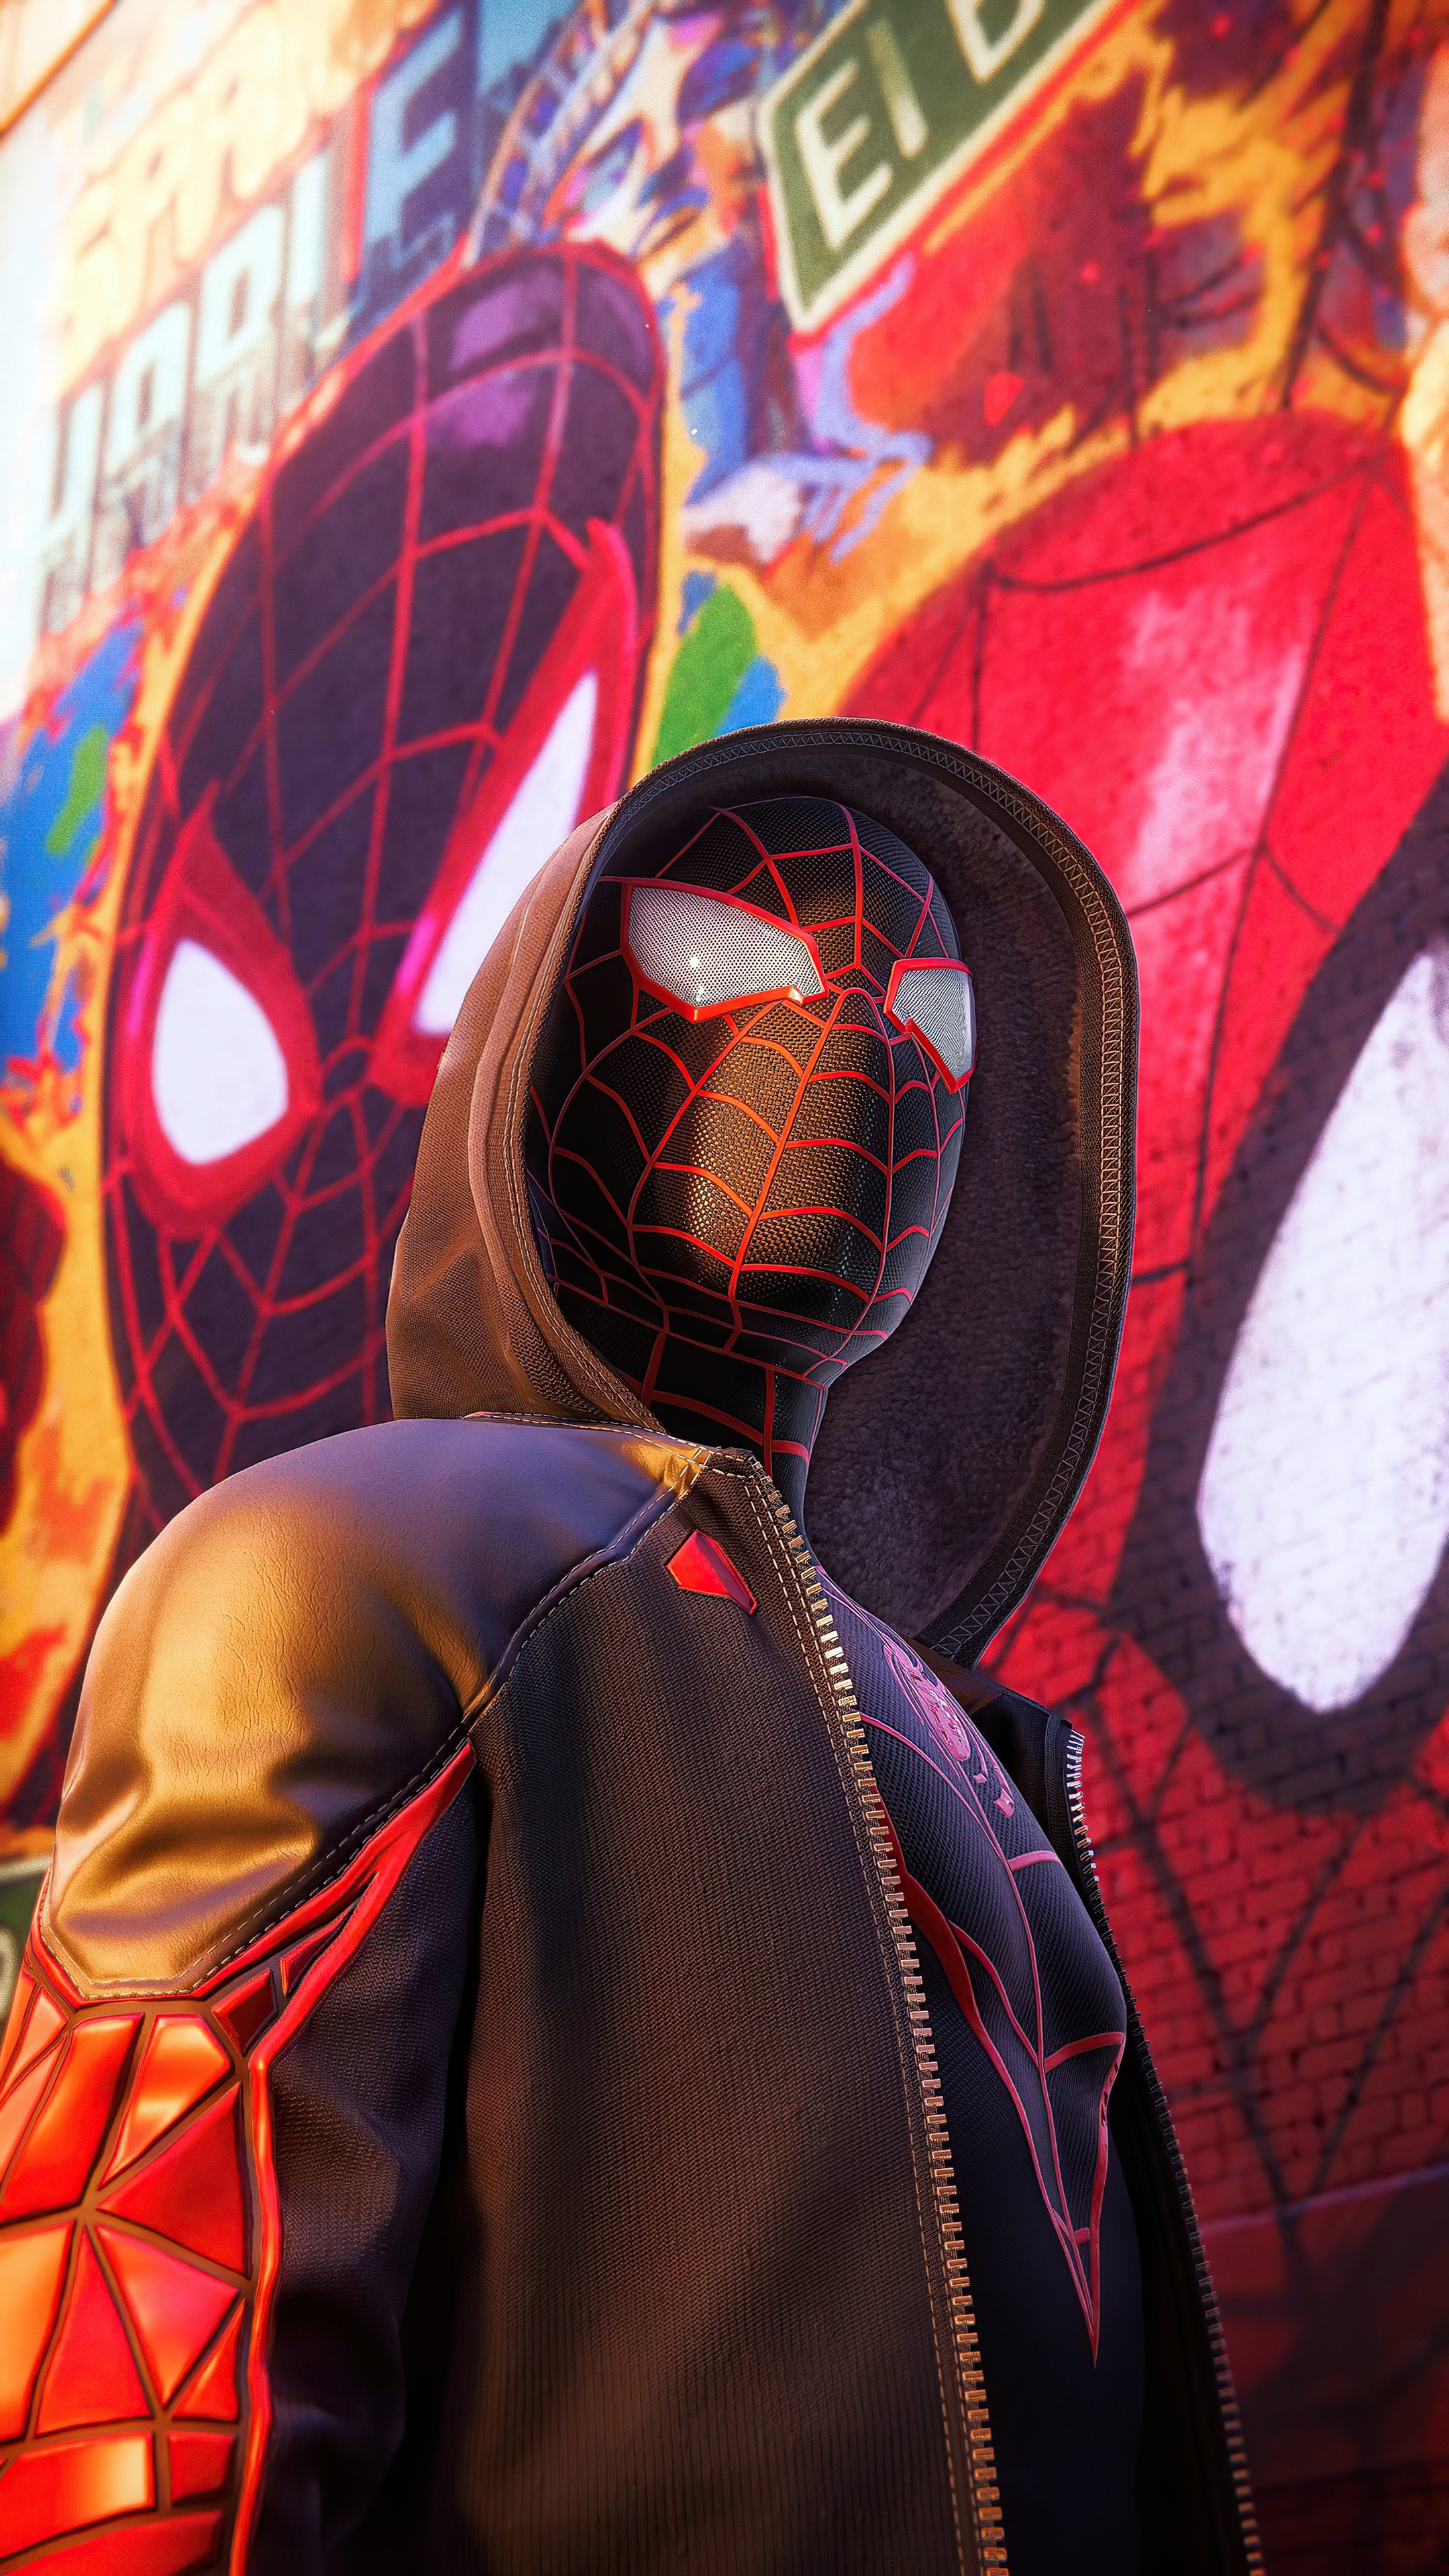 Spider Man Black Leather Jacket Graffiti Portrait Display Superhero Hoods Digital Art 2160x3840